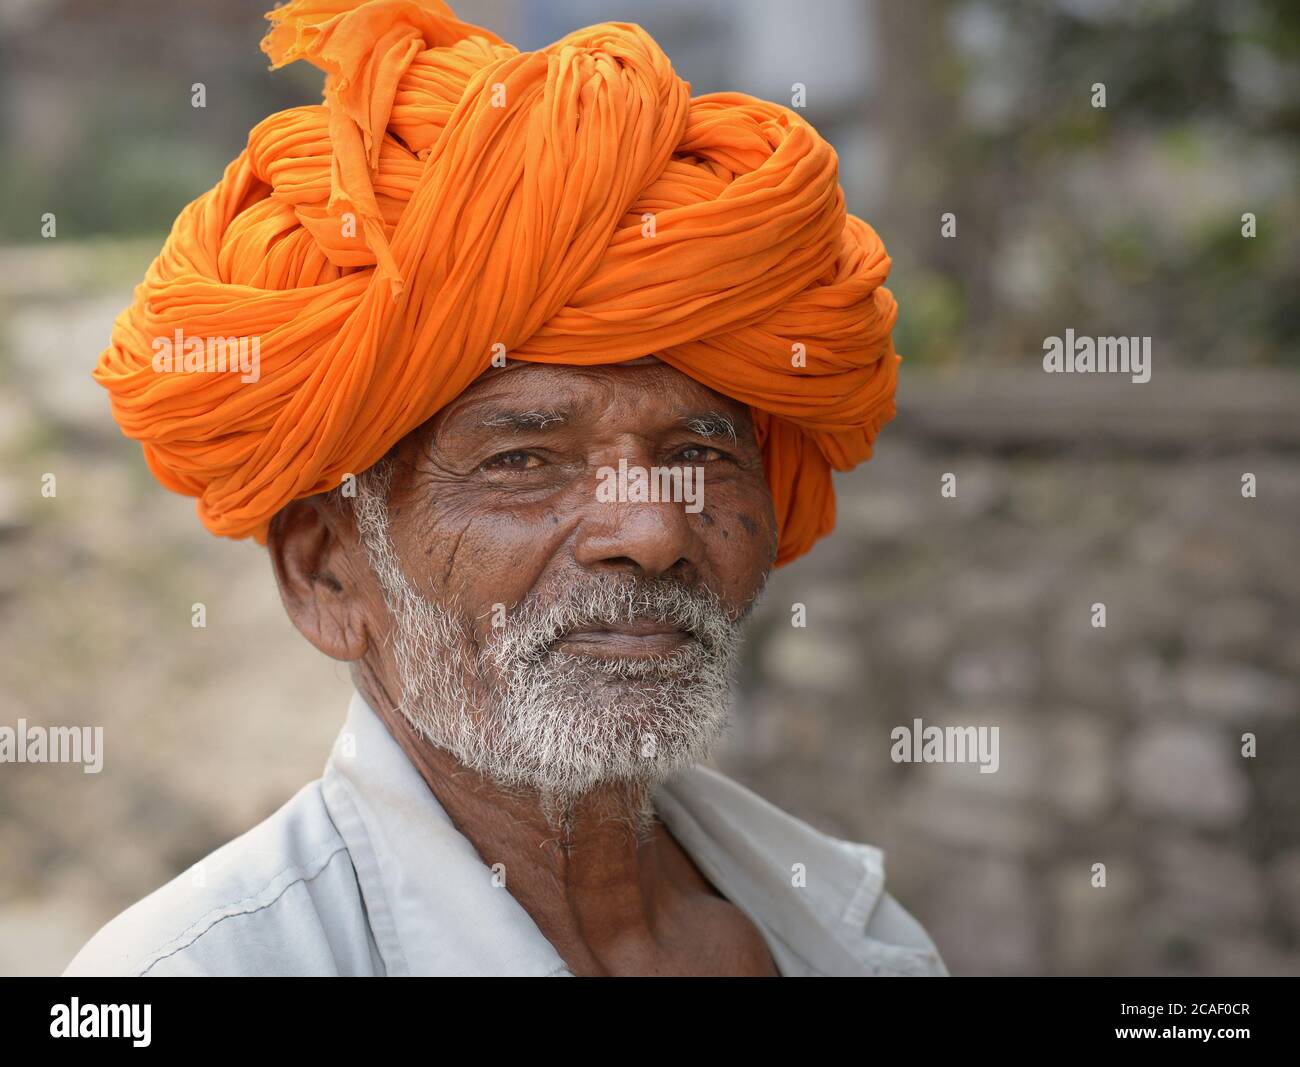 Elderly Indian Rajasthani man with orange turban (pagari) poses for the camera. Stock Photo